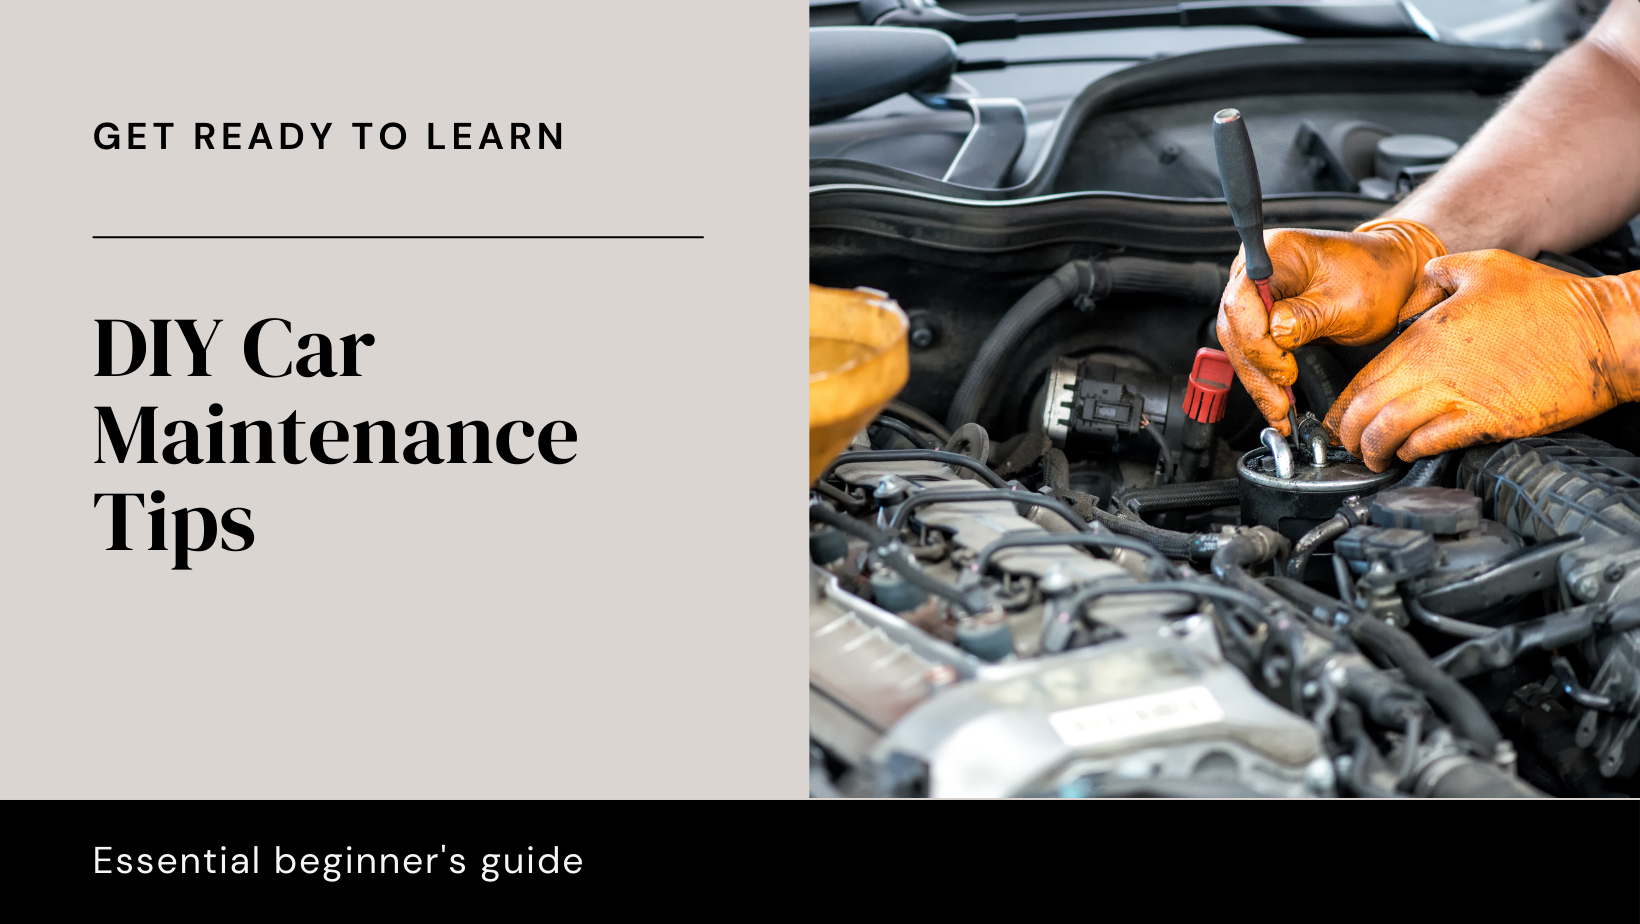 DIY Car Maintenance Tips for Beginners